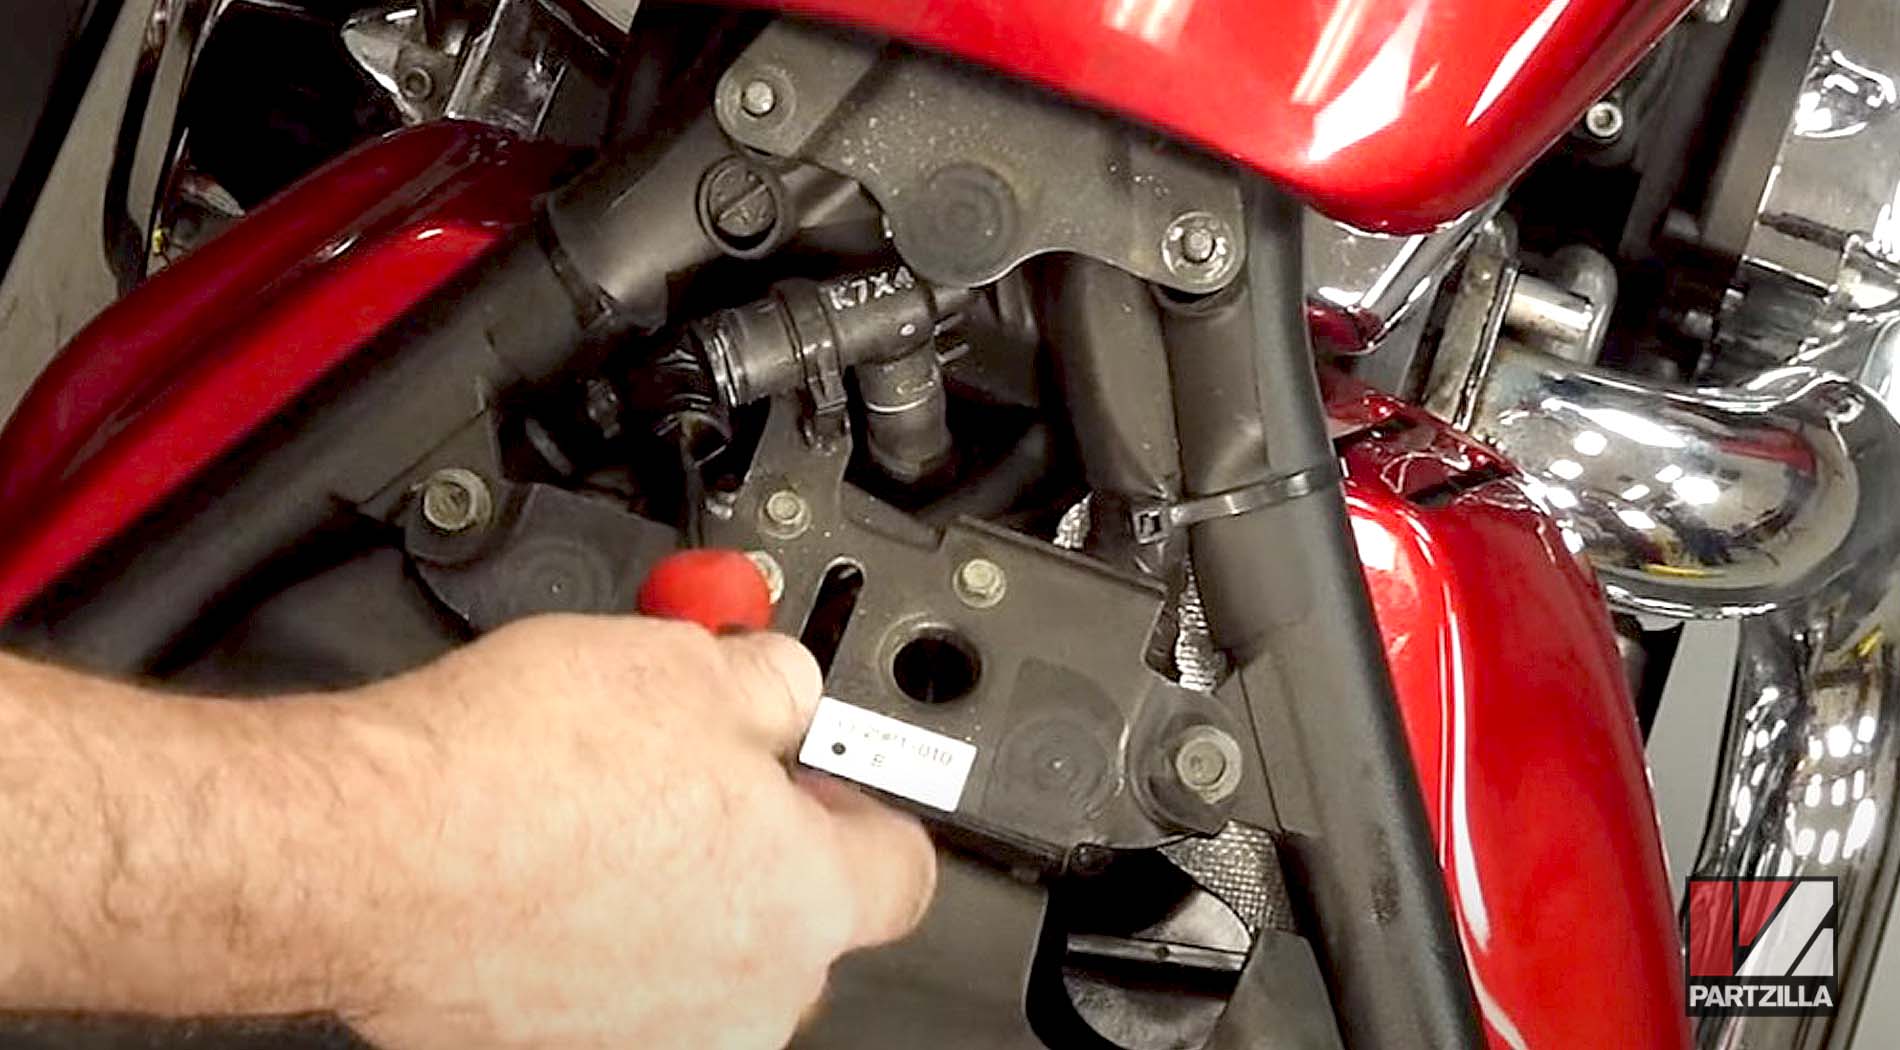 How to change Yamaha Raider spark plugs